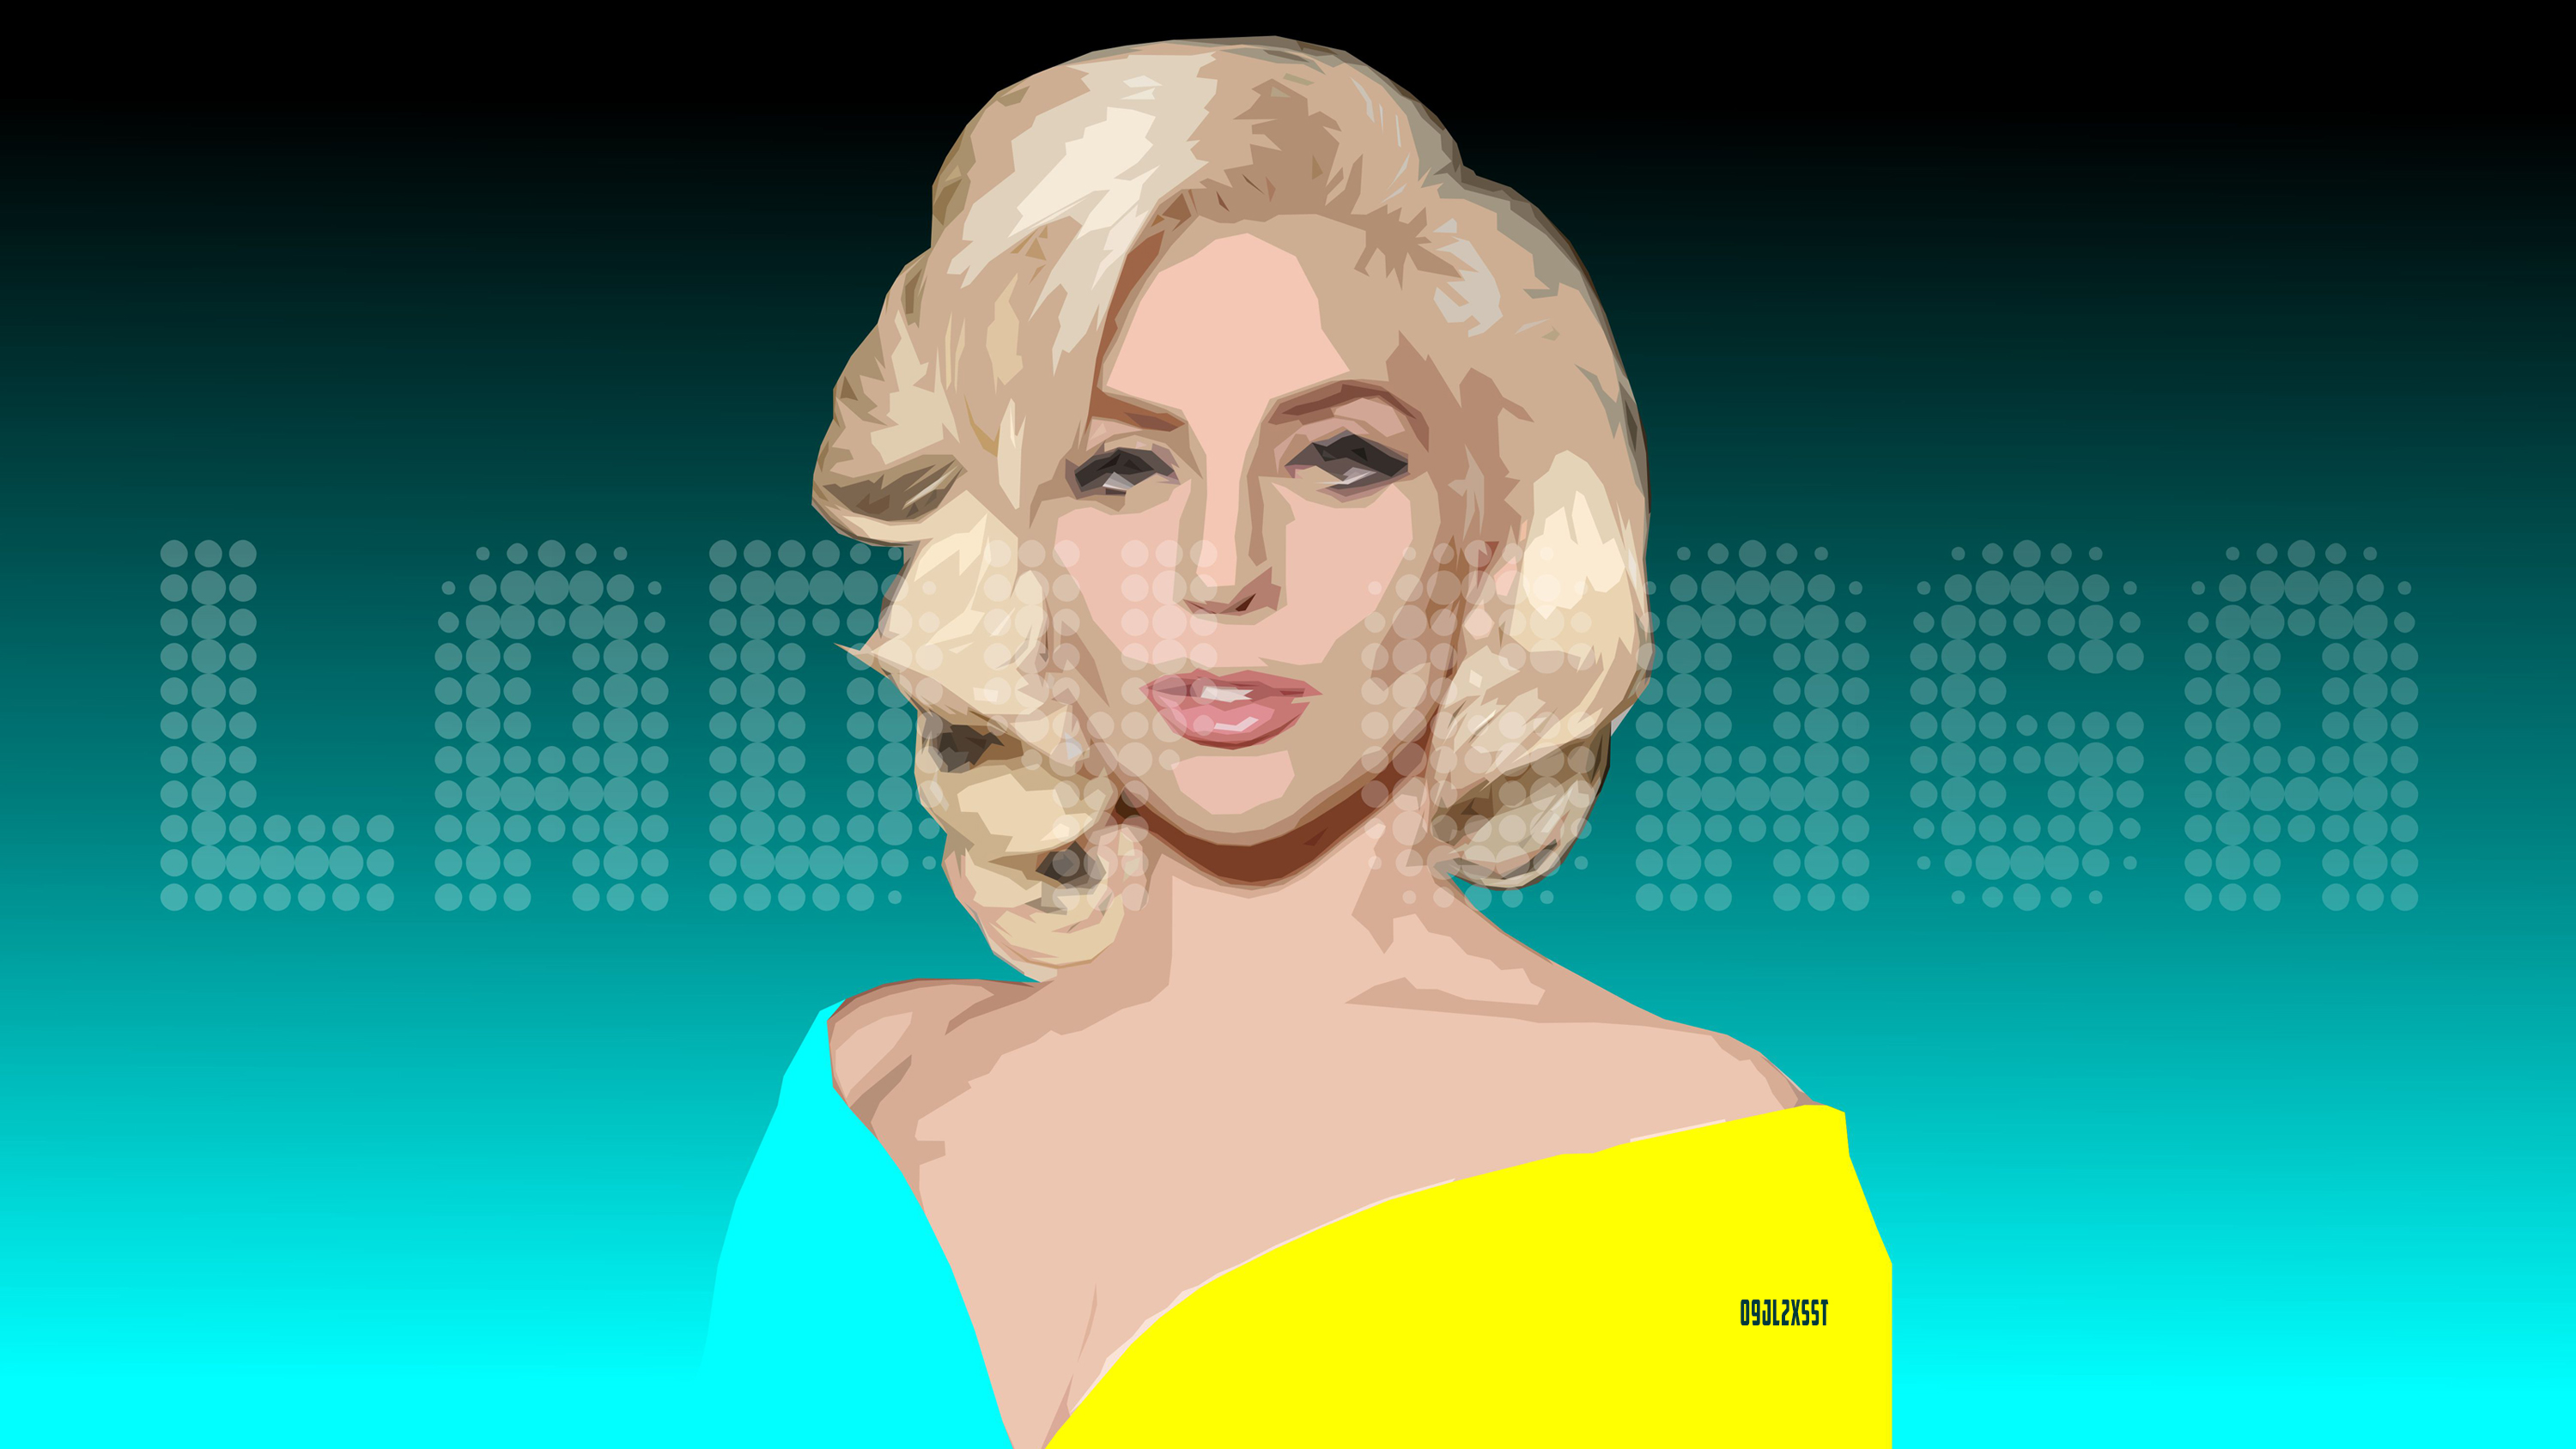 American Blonde Digital Art Face Lady Gaga Music Portrait Singer 3000x1688